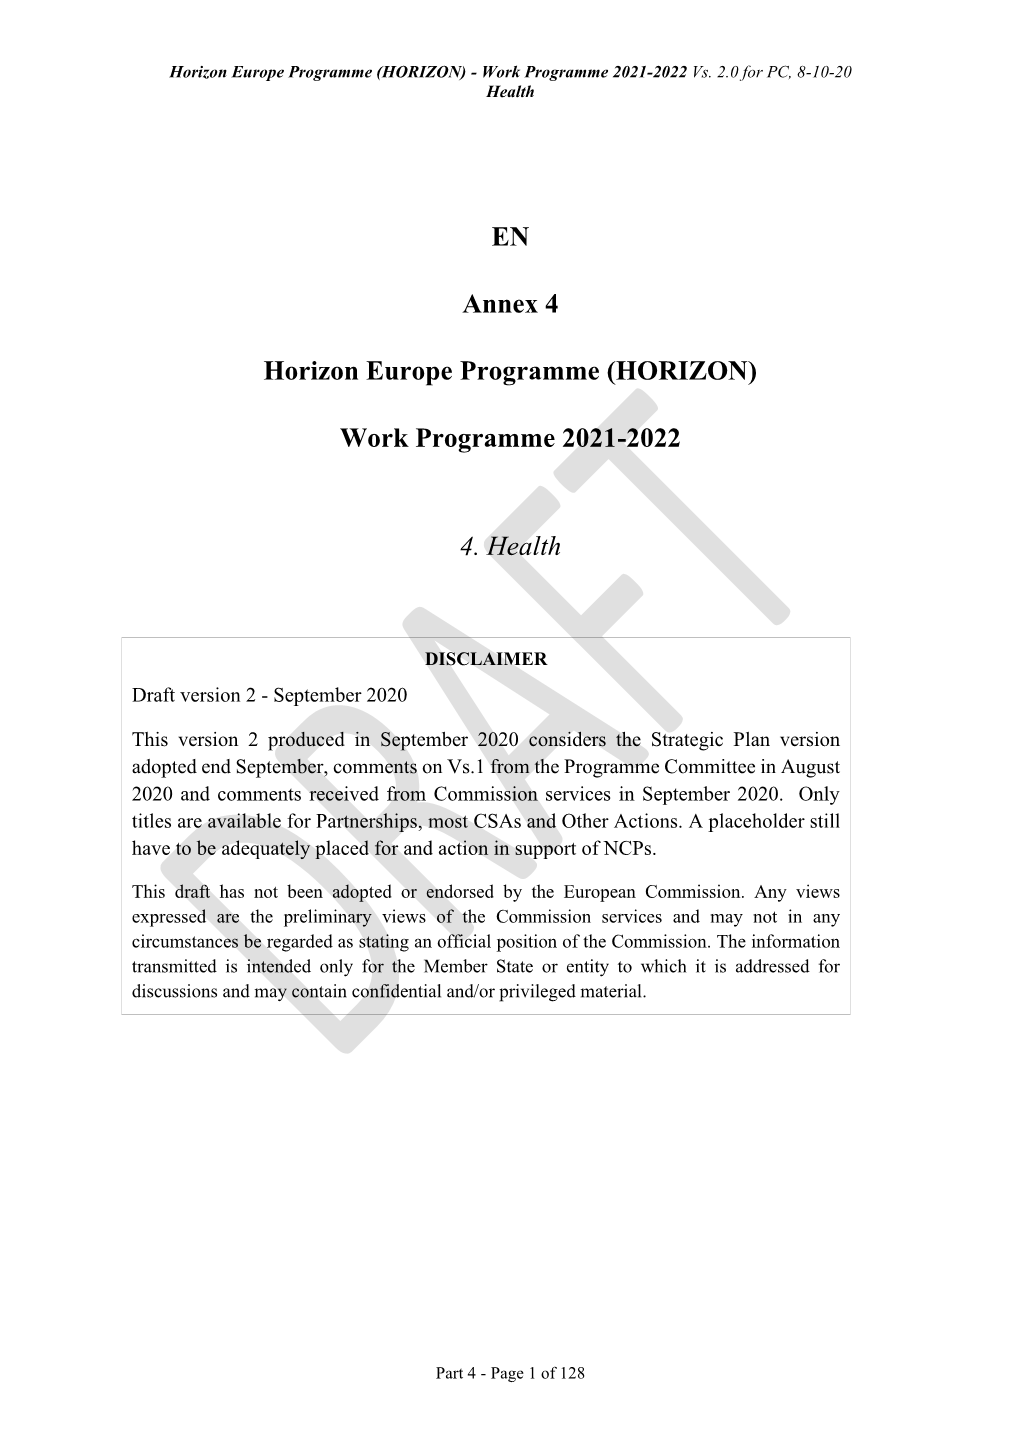 (HORIZON) Work Programme 2021-2022 4. Health